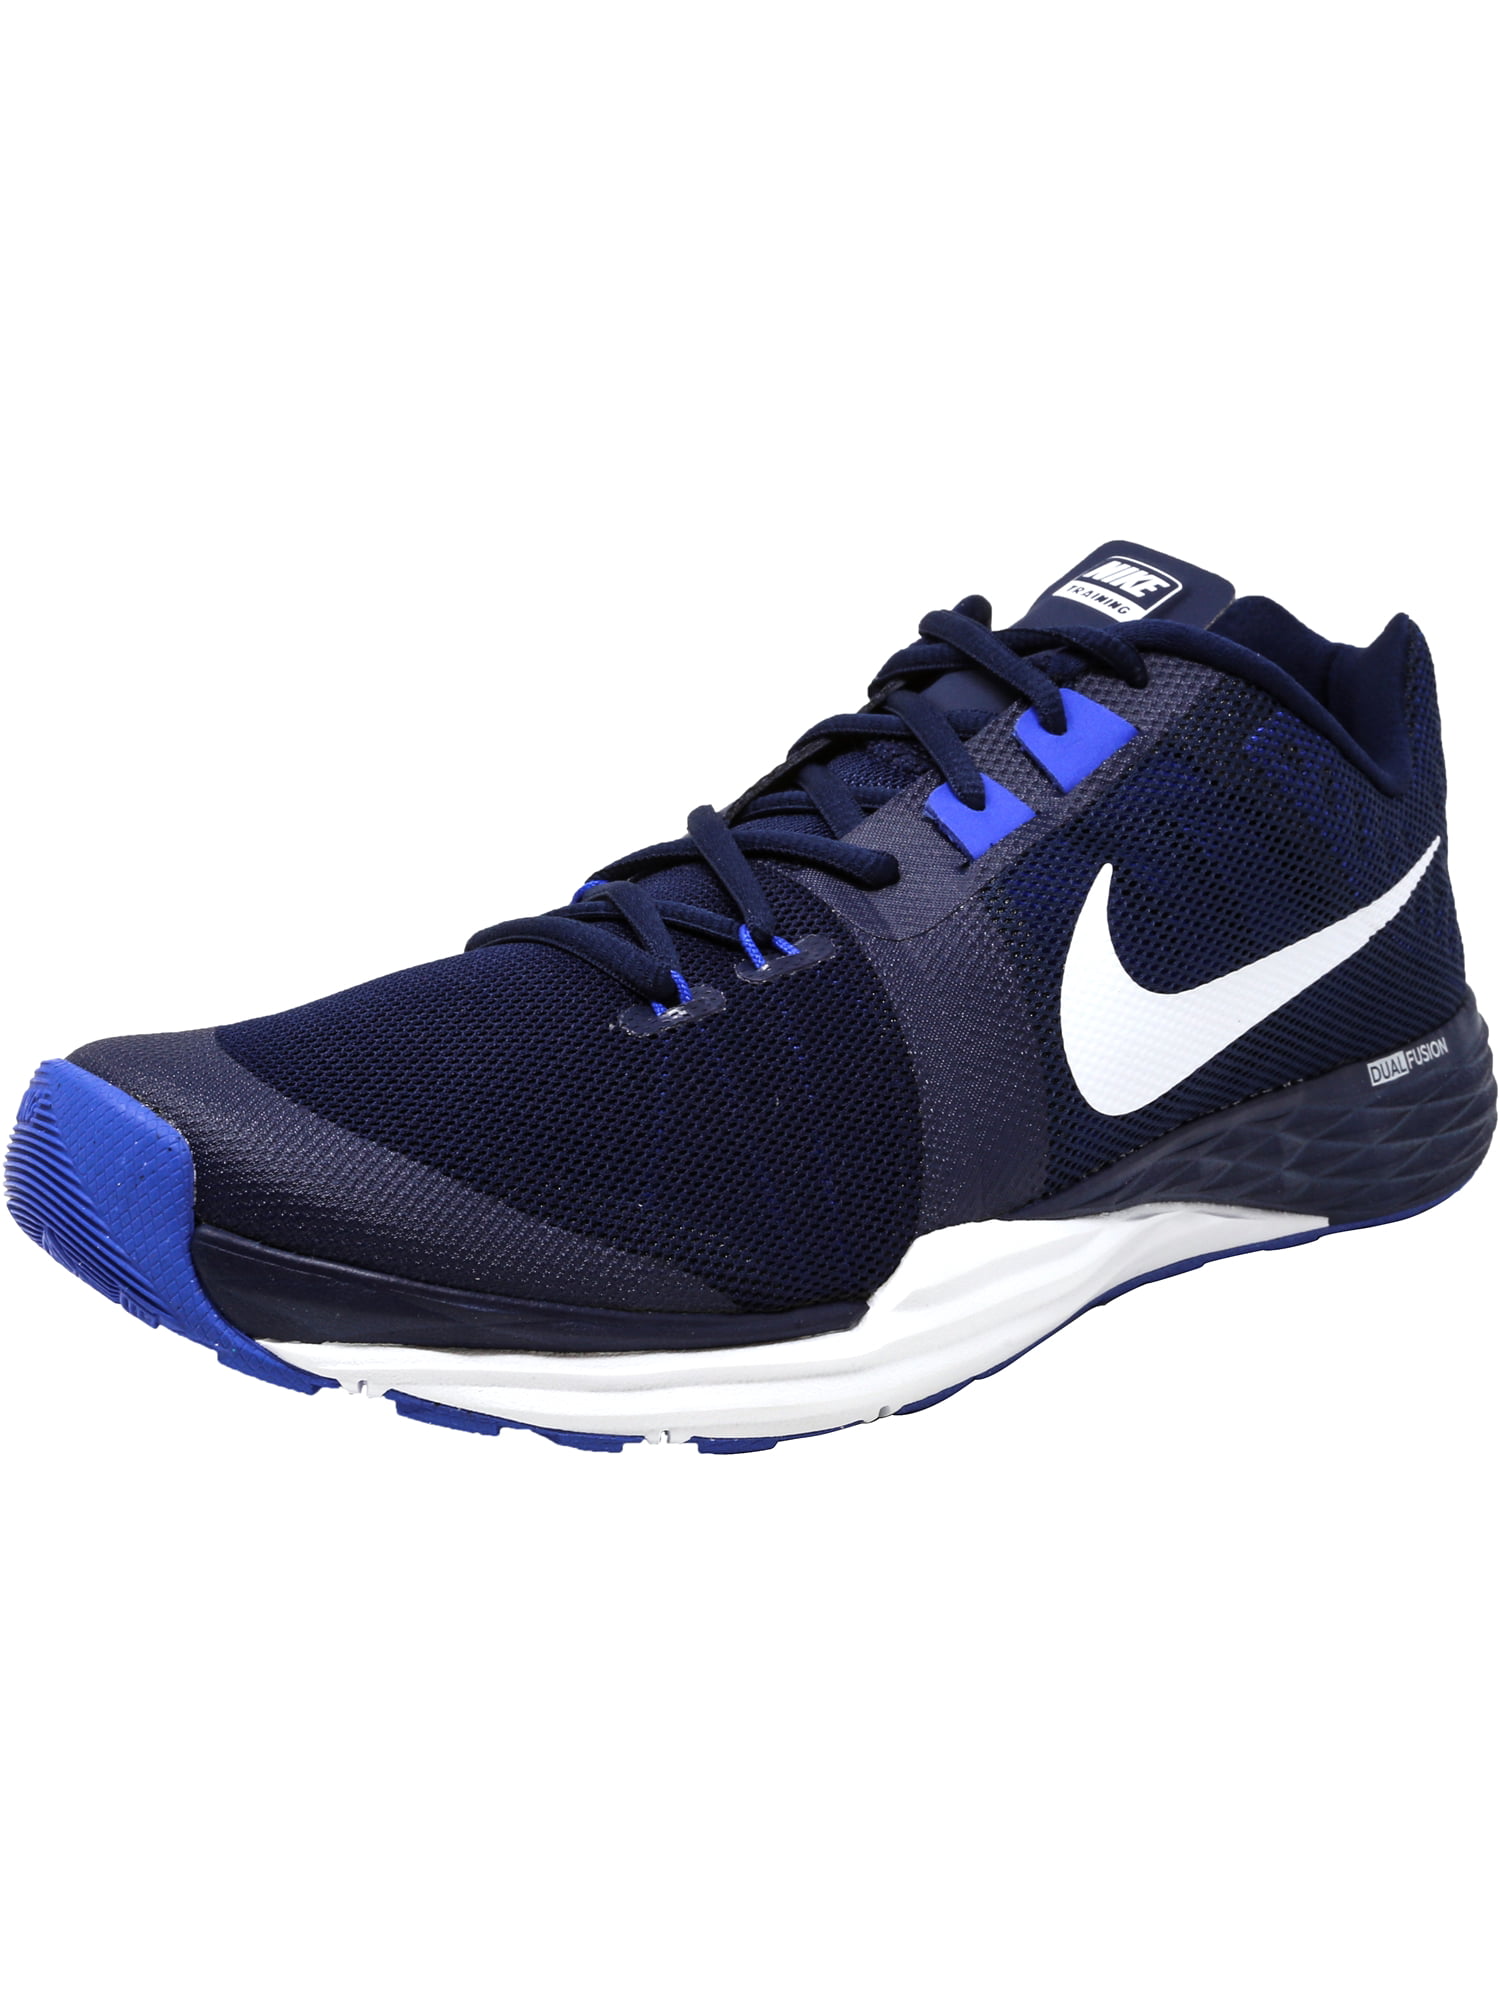 Nike Train Prime Iron Df Grey Ankle-High Cross Trainer Shoe - - Walmart.com